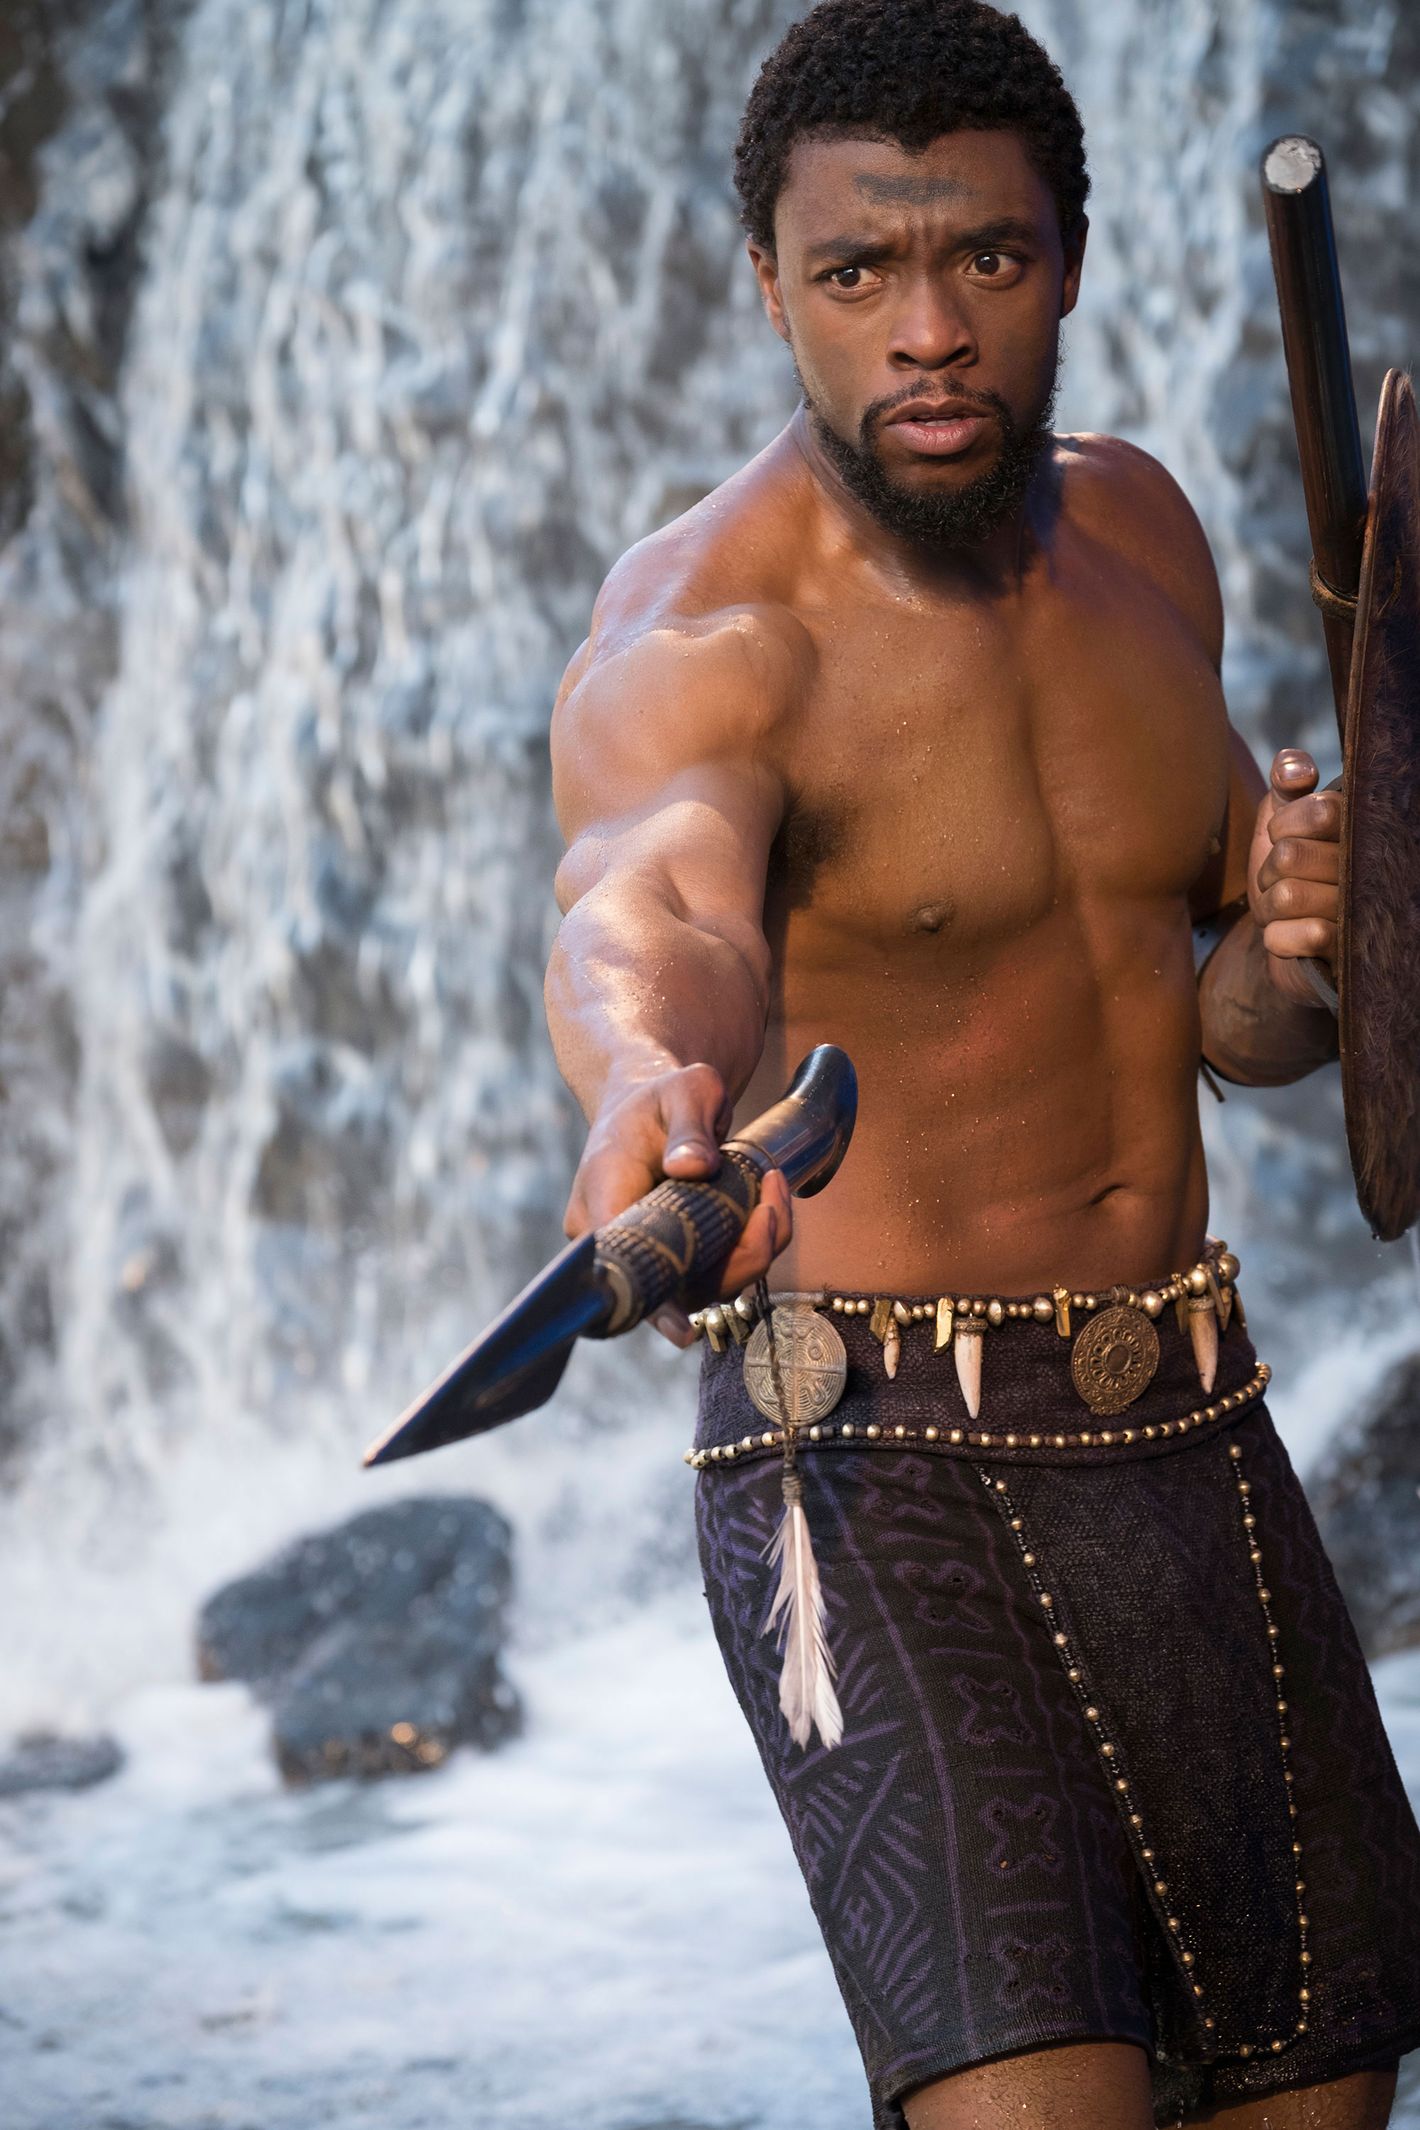 See Black Panther's Michael B. Jordan Look Like a Total Snack